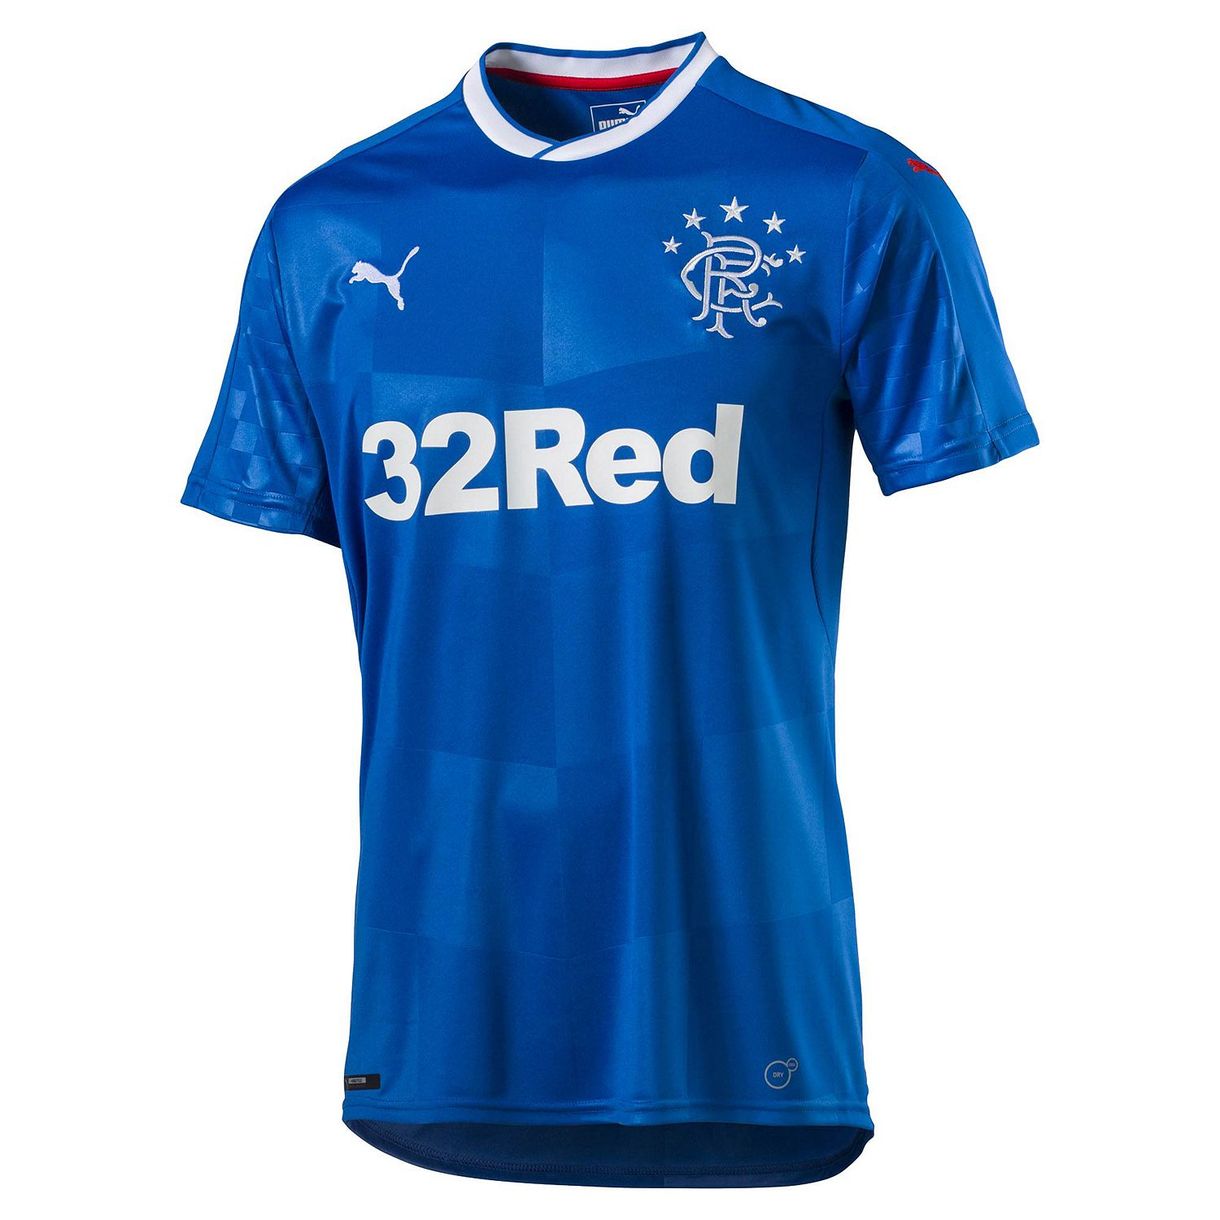 Rangers’ fan poll: will you buy a Rangers shirt?